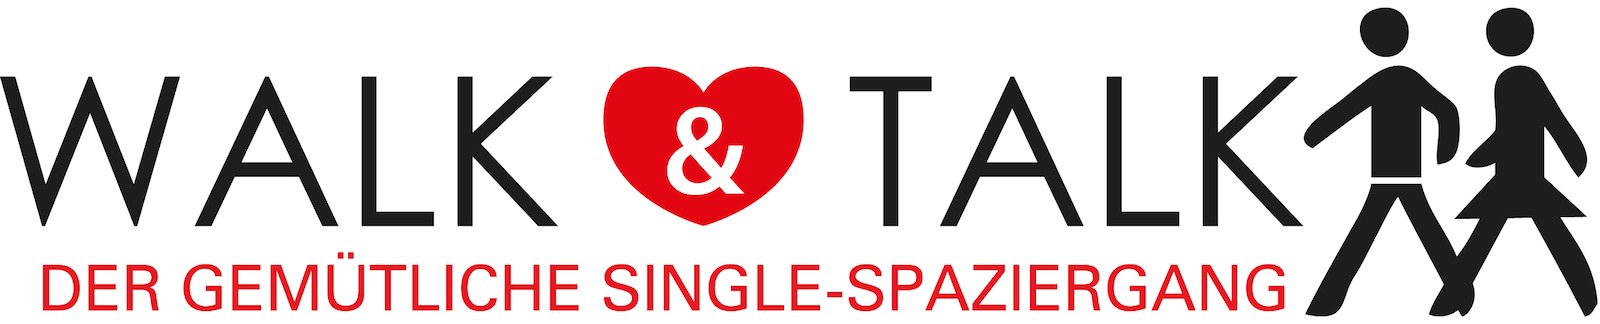 Walk & Talk Logo